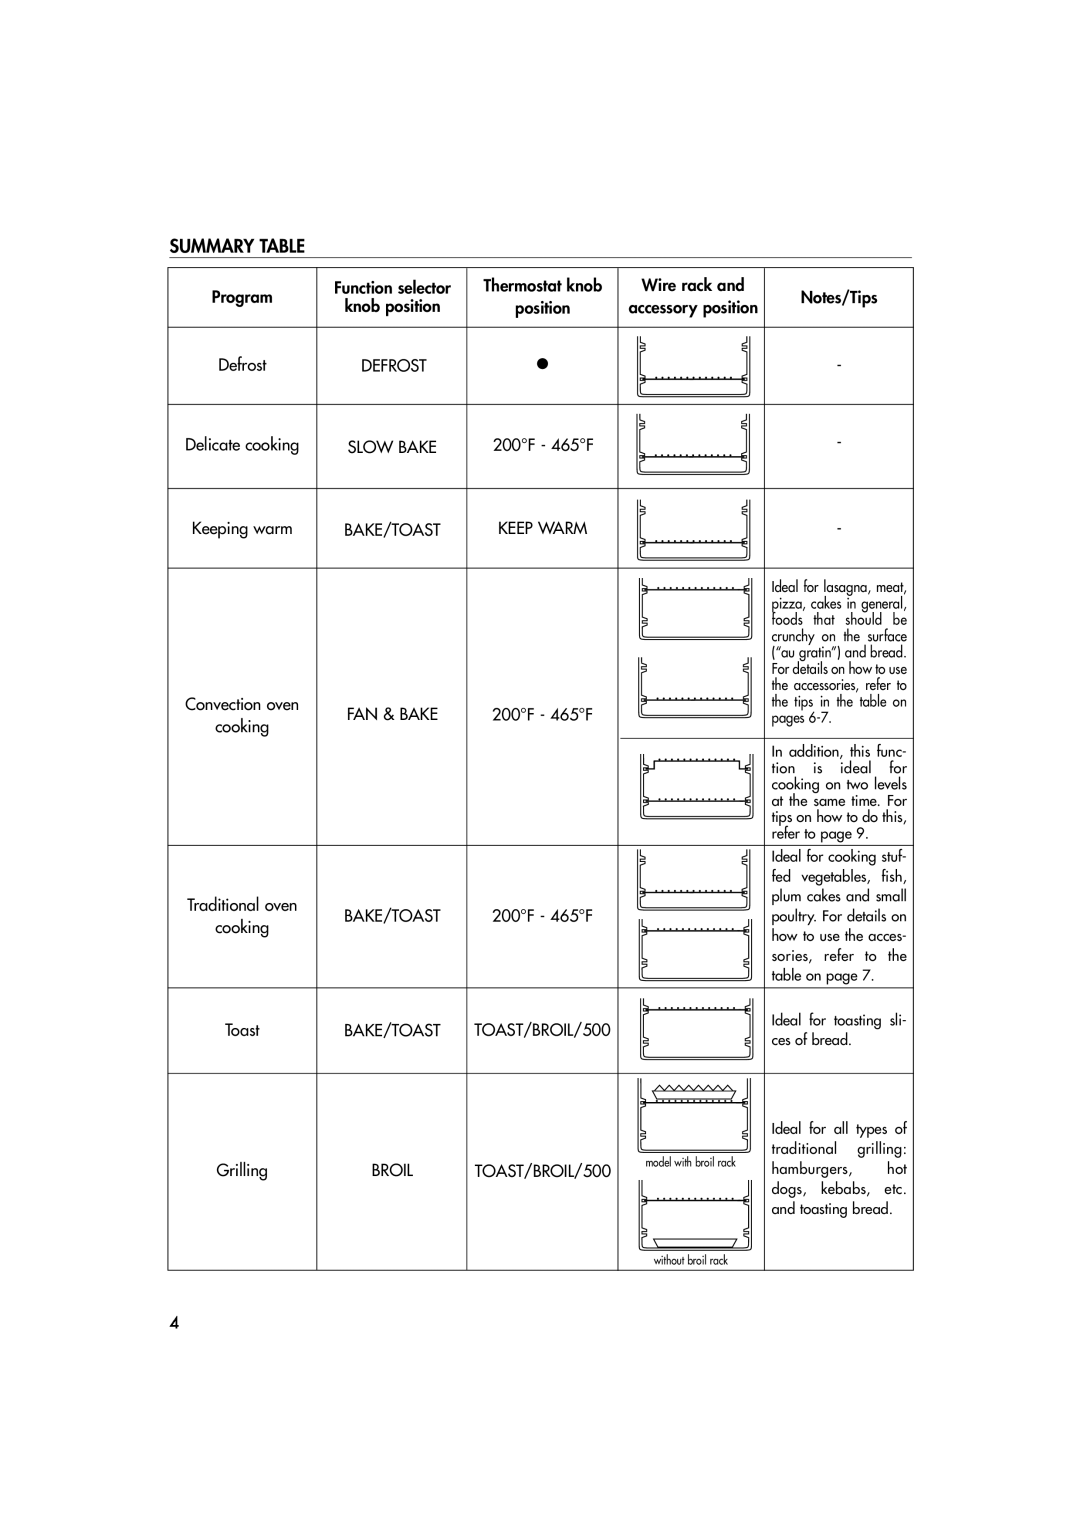 DeLonghi EO1270 B manual Summary Table 